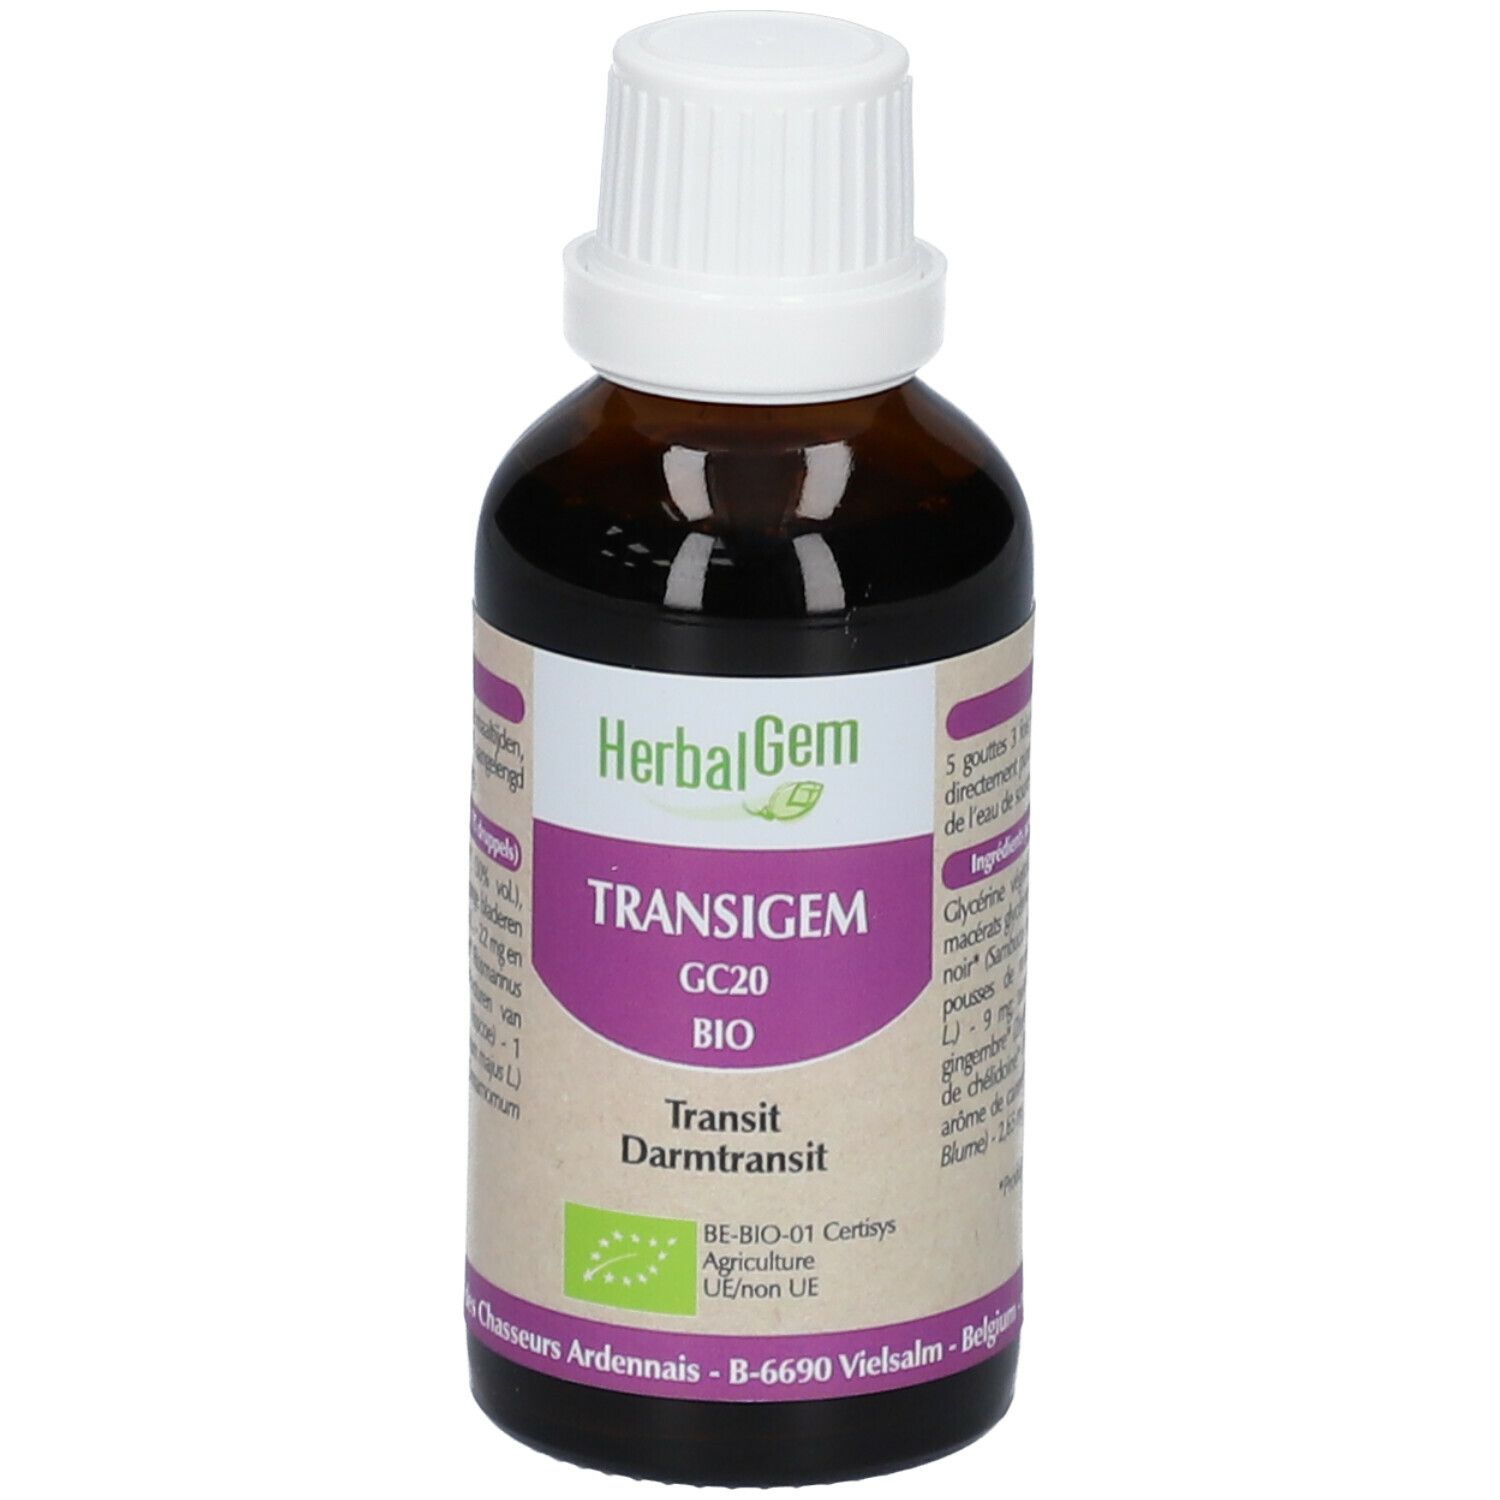 Herbalgem Transigem Bio Confort Intestinal